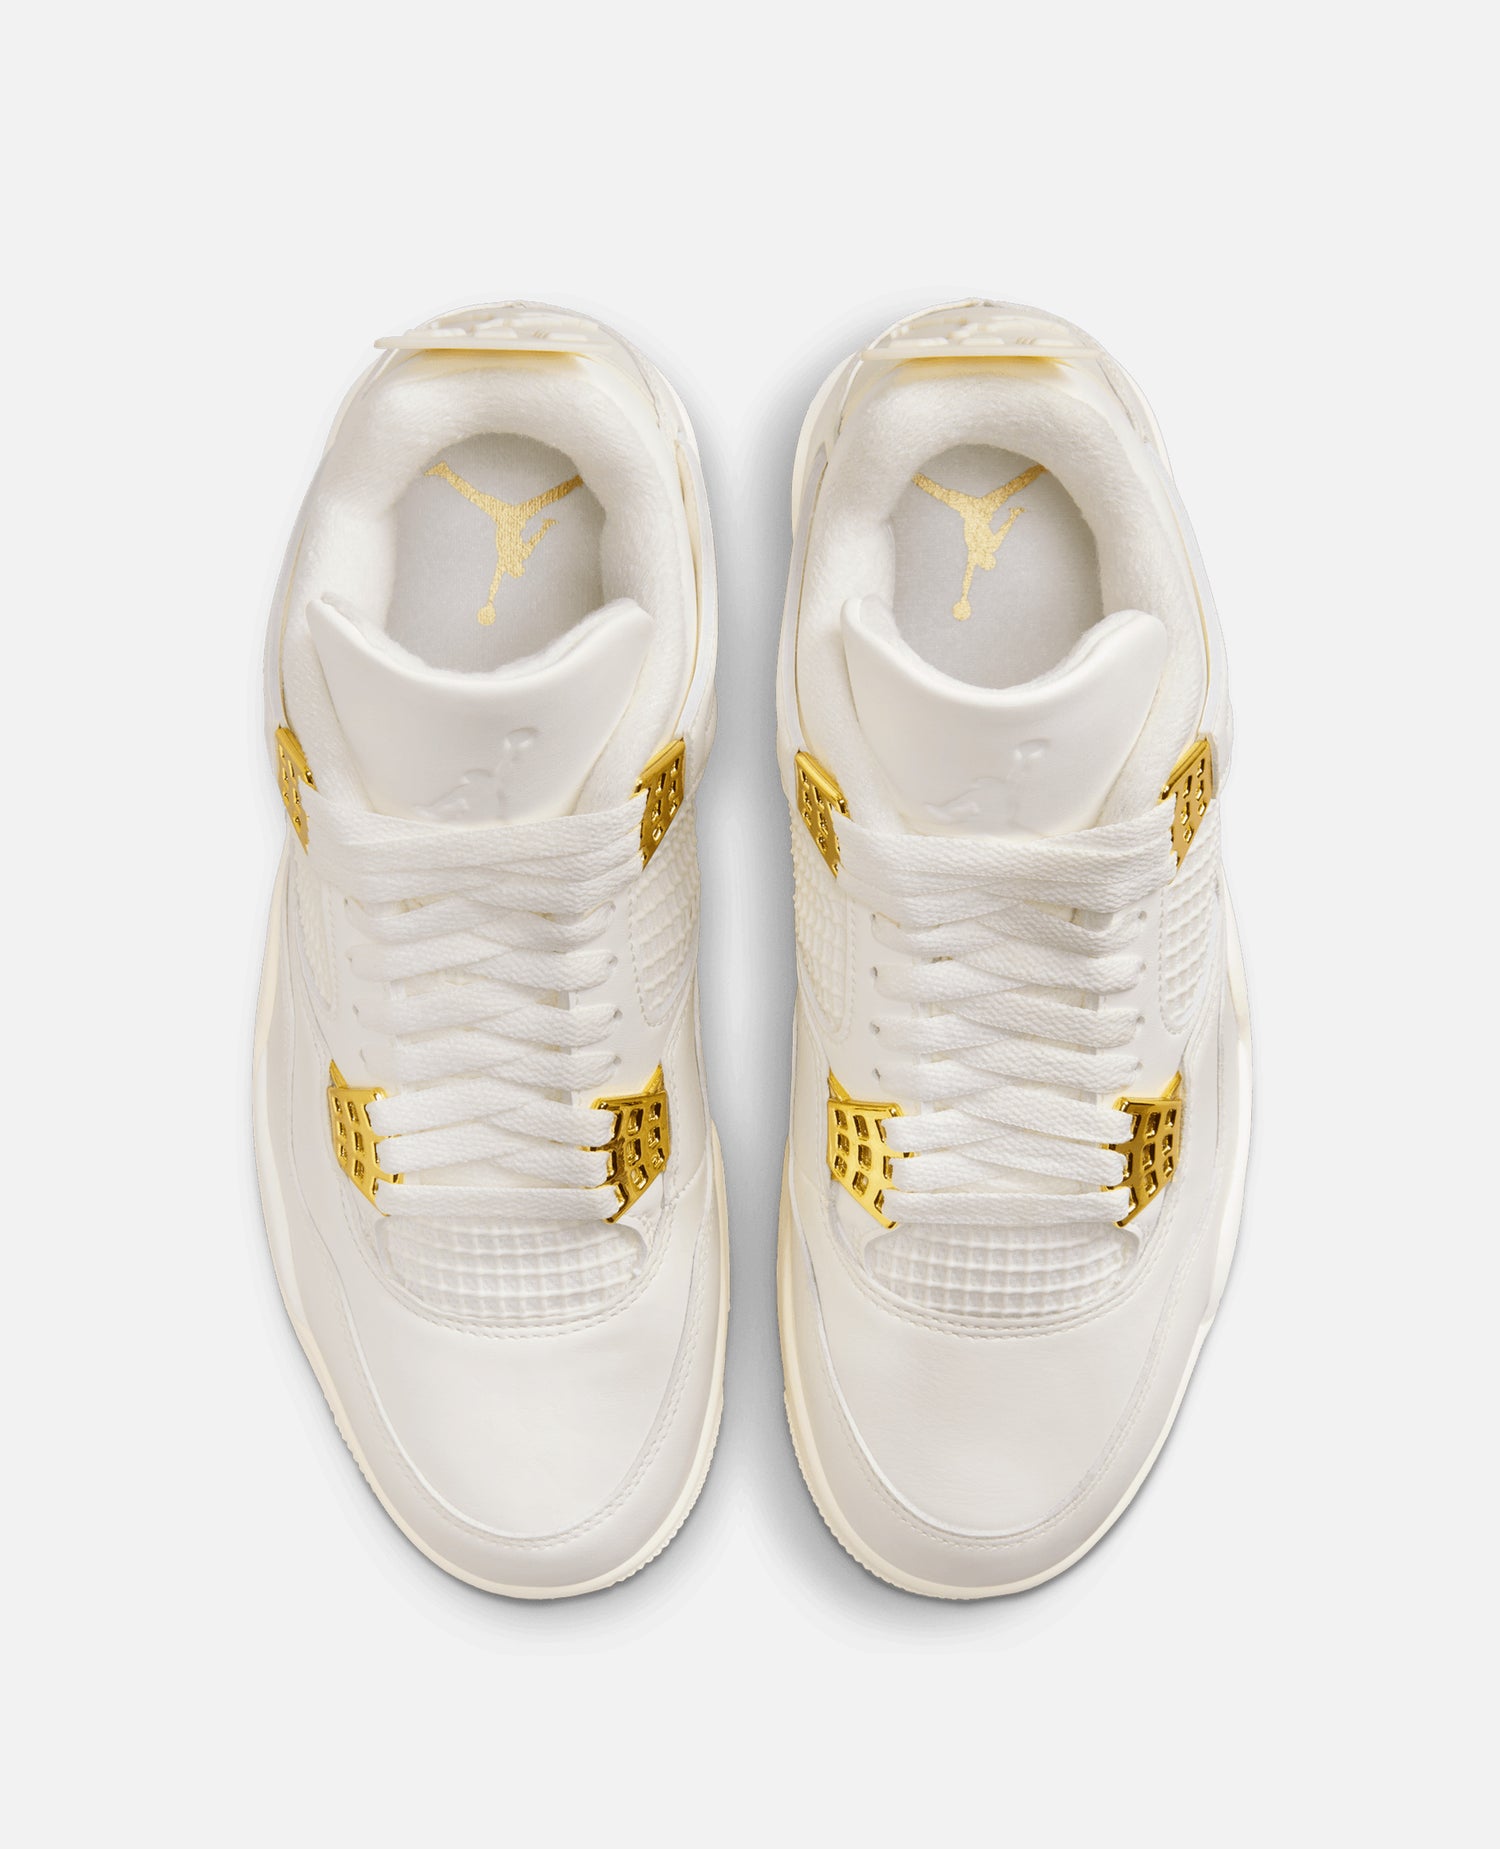 Nike WMNS Air Jordan 4 Retro (Sail/Metallic Gold-Black)